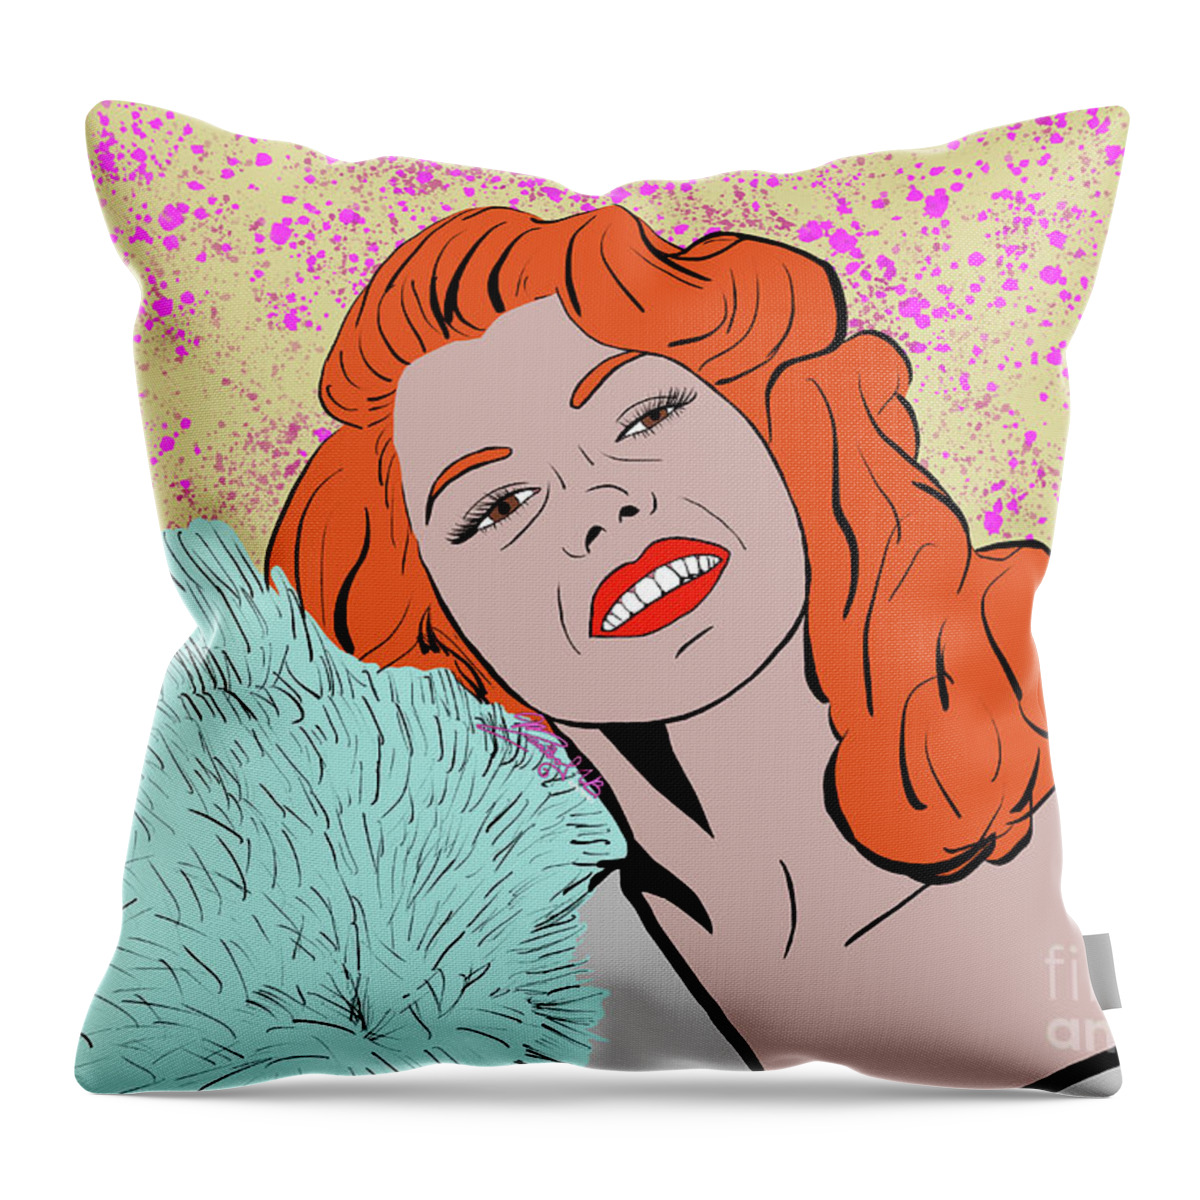 Rita Hayworth Throw Pillow featuring the digital art Rita Hayworth by Marisol VB